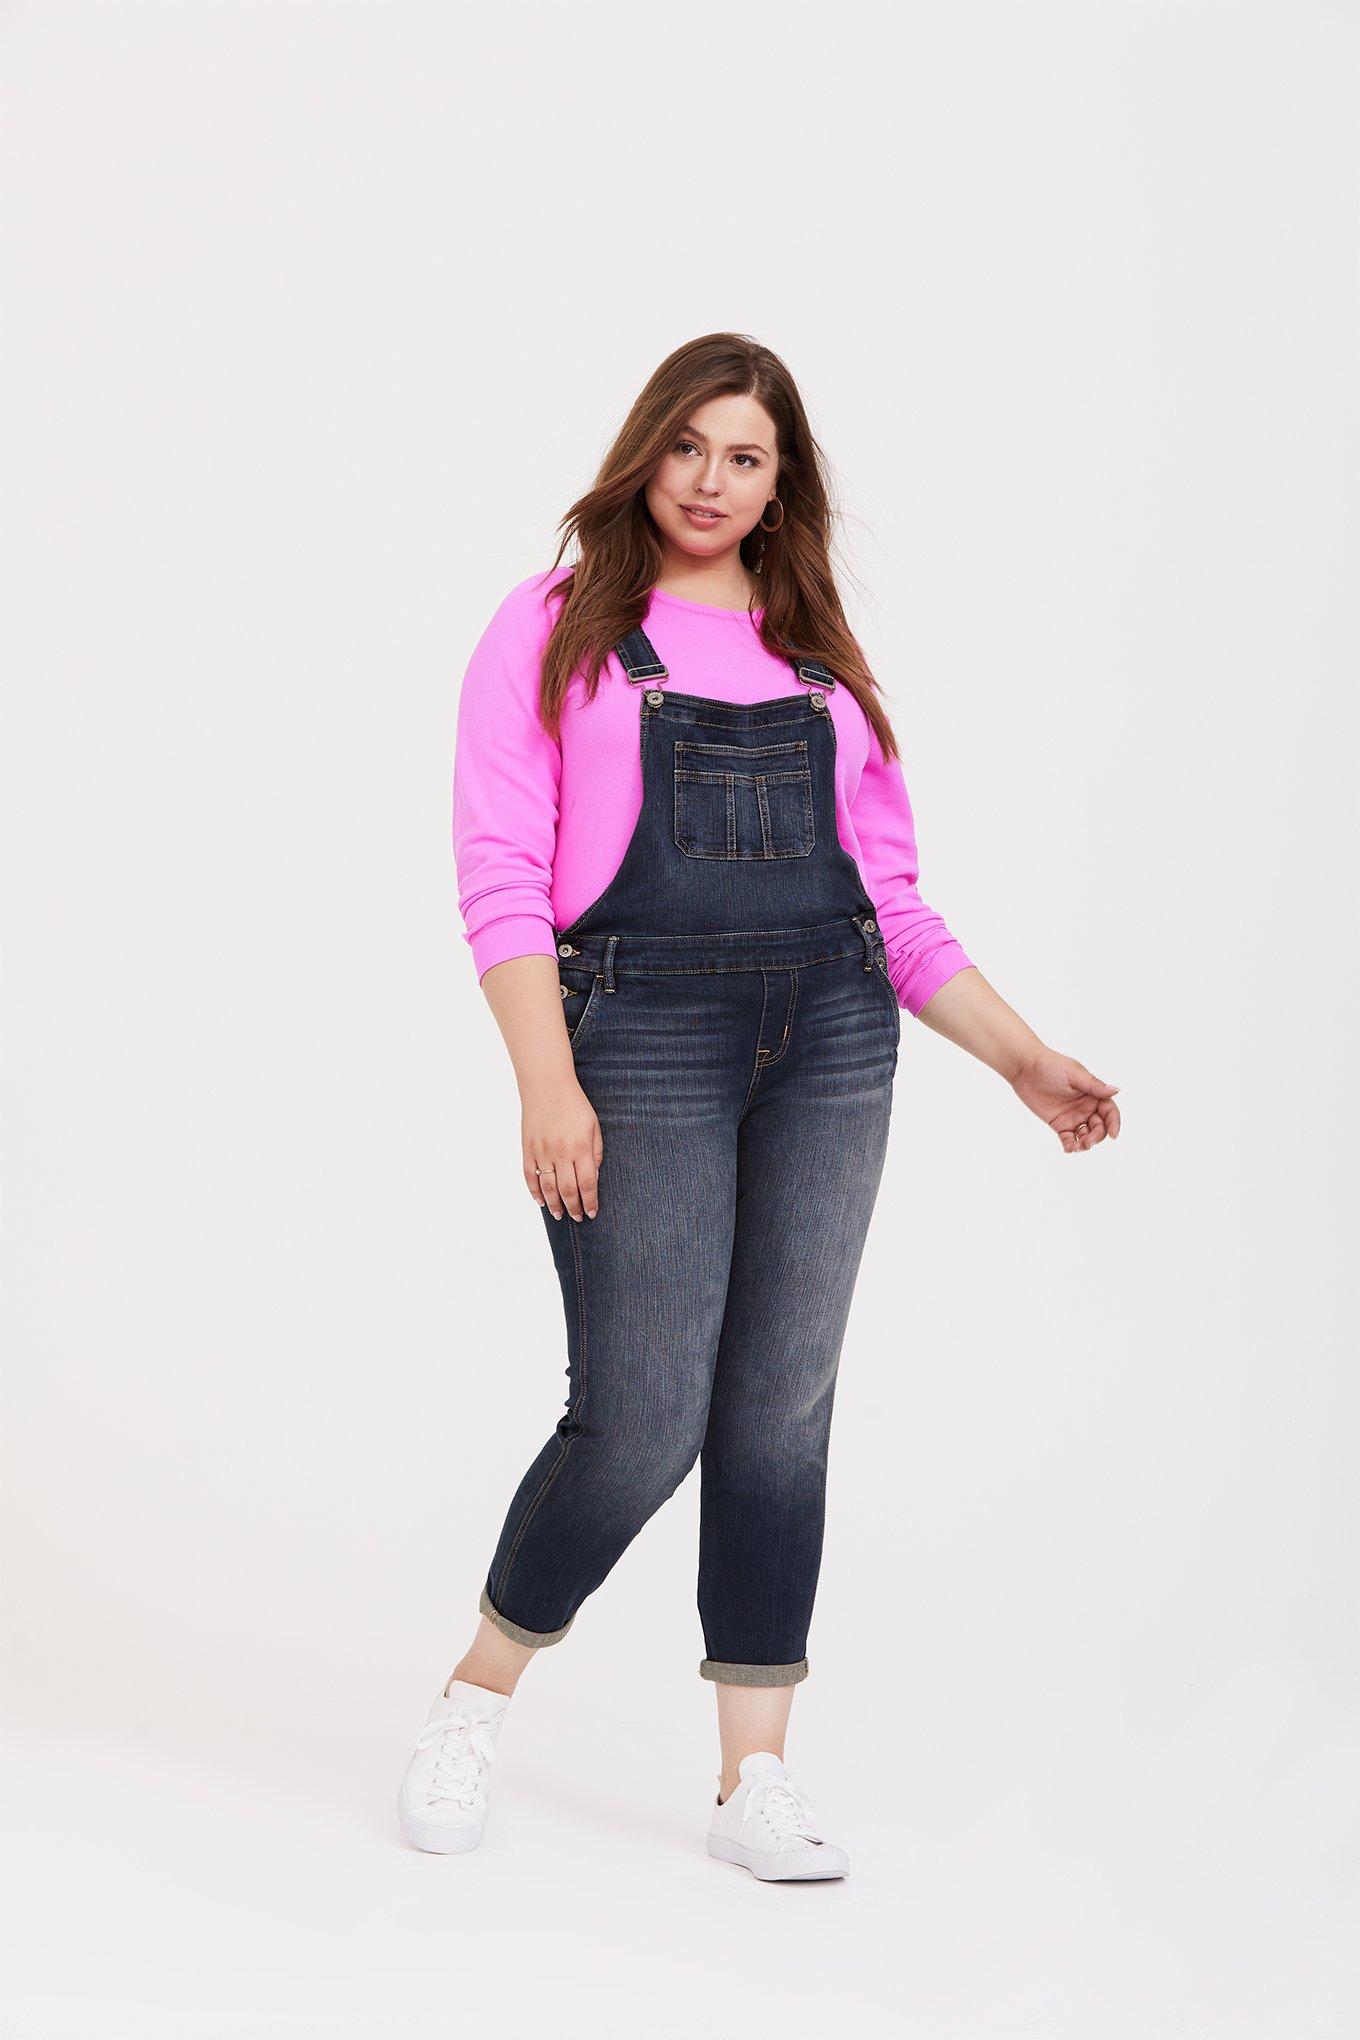 Plus Size - Neon Pink Pullover Raglan Sweatshirt - Torrid